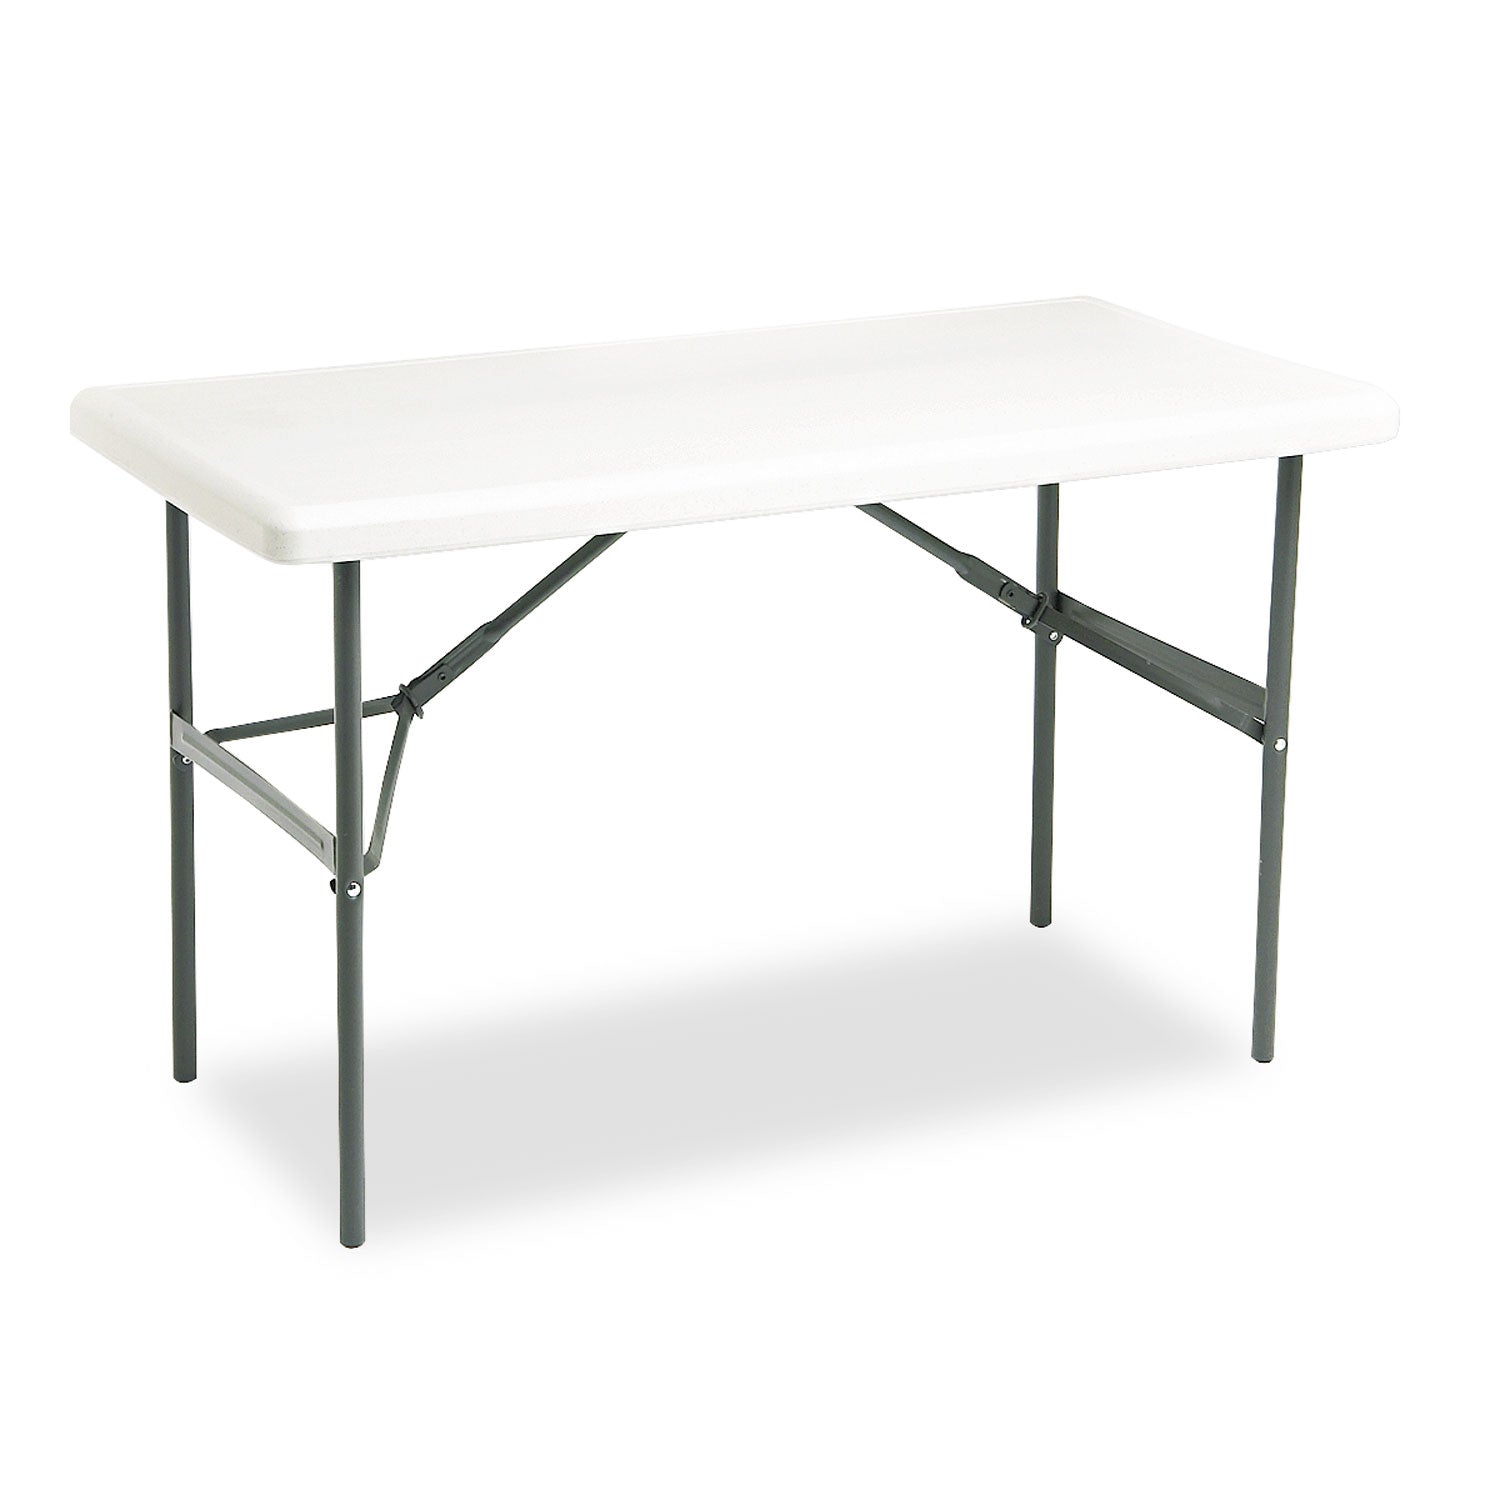 IndestrucTable Classic Folding Table, Rectangular, 48" x 24" x 29", Platinum - 